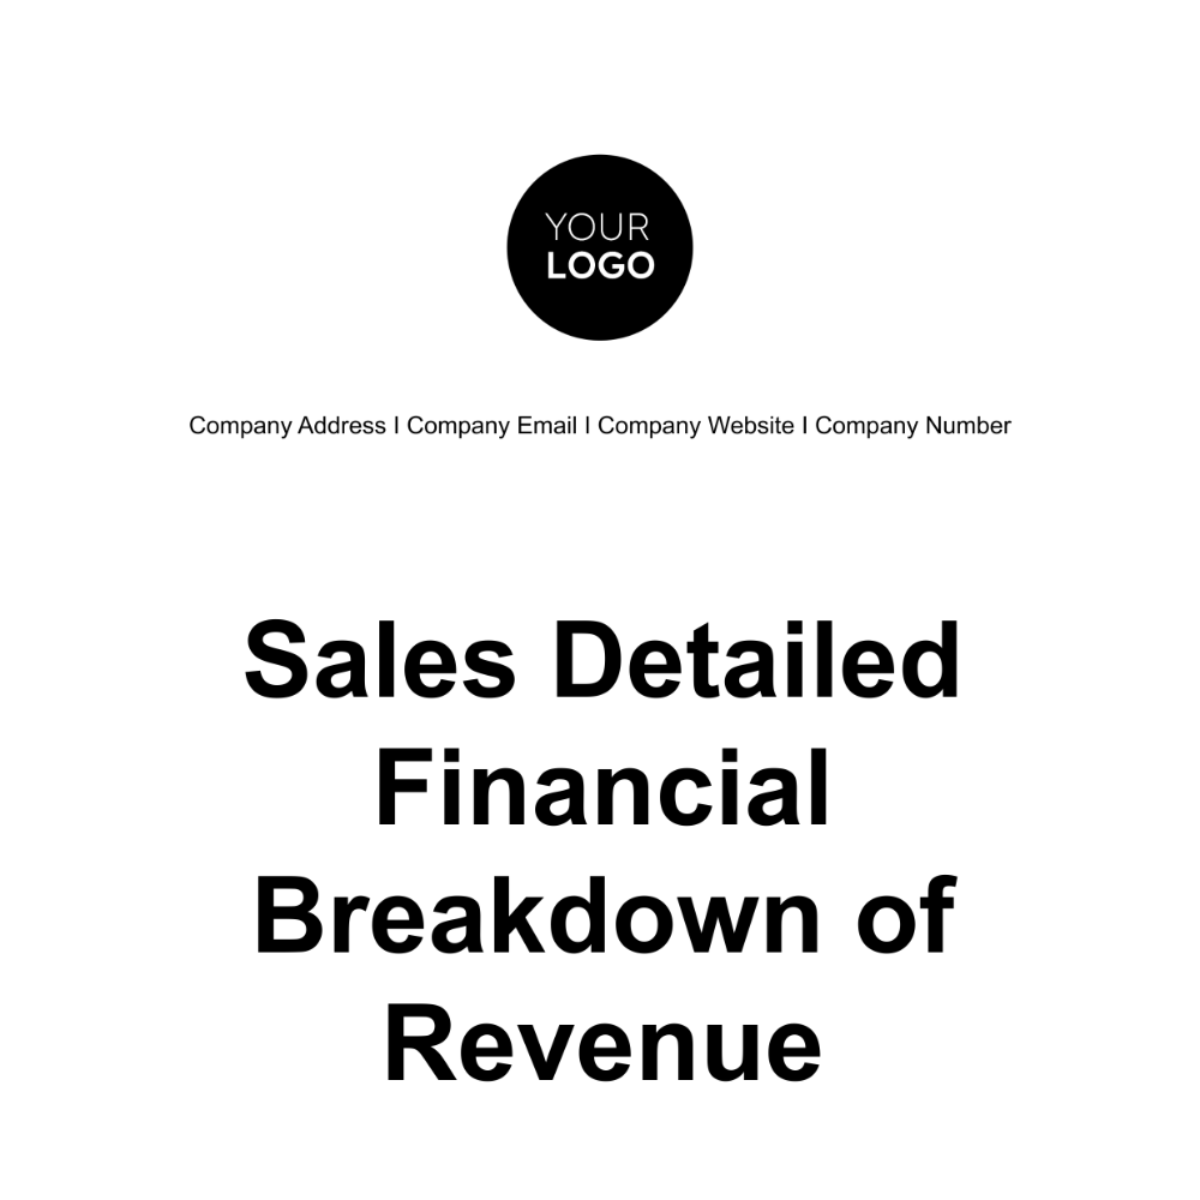 Sales Detailed Financial Breakdown of Revenue Template